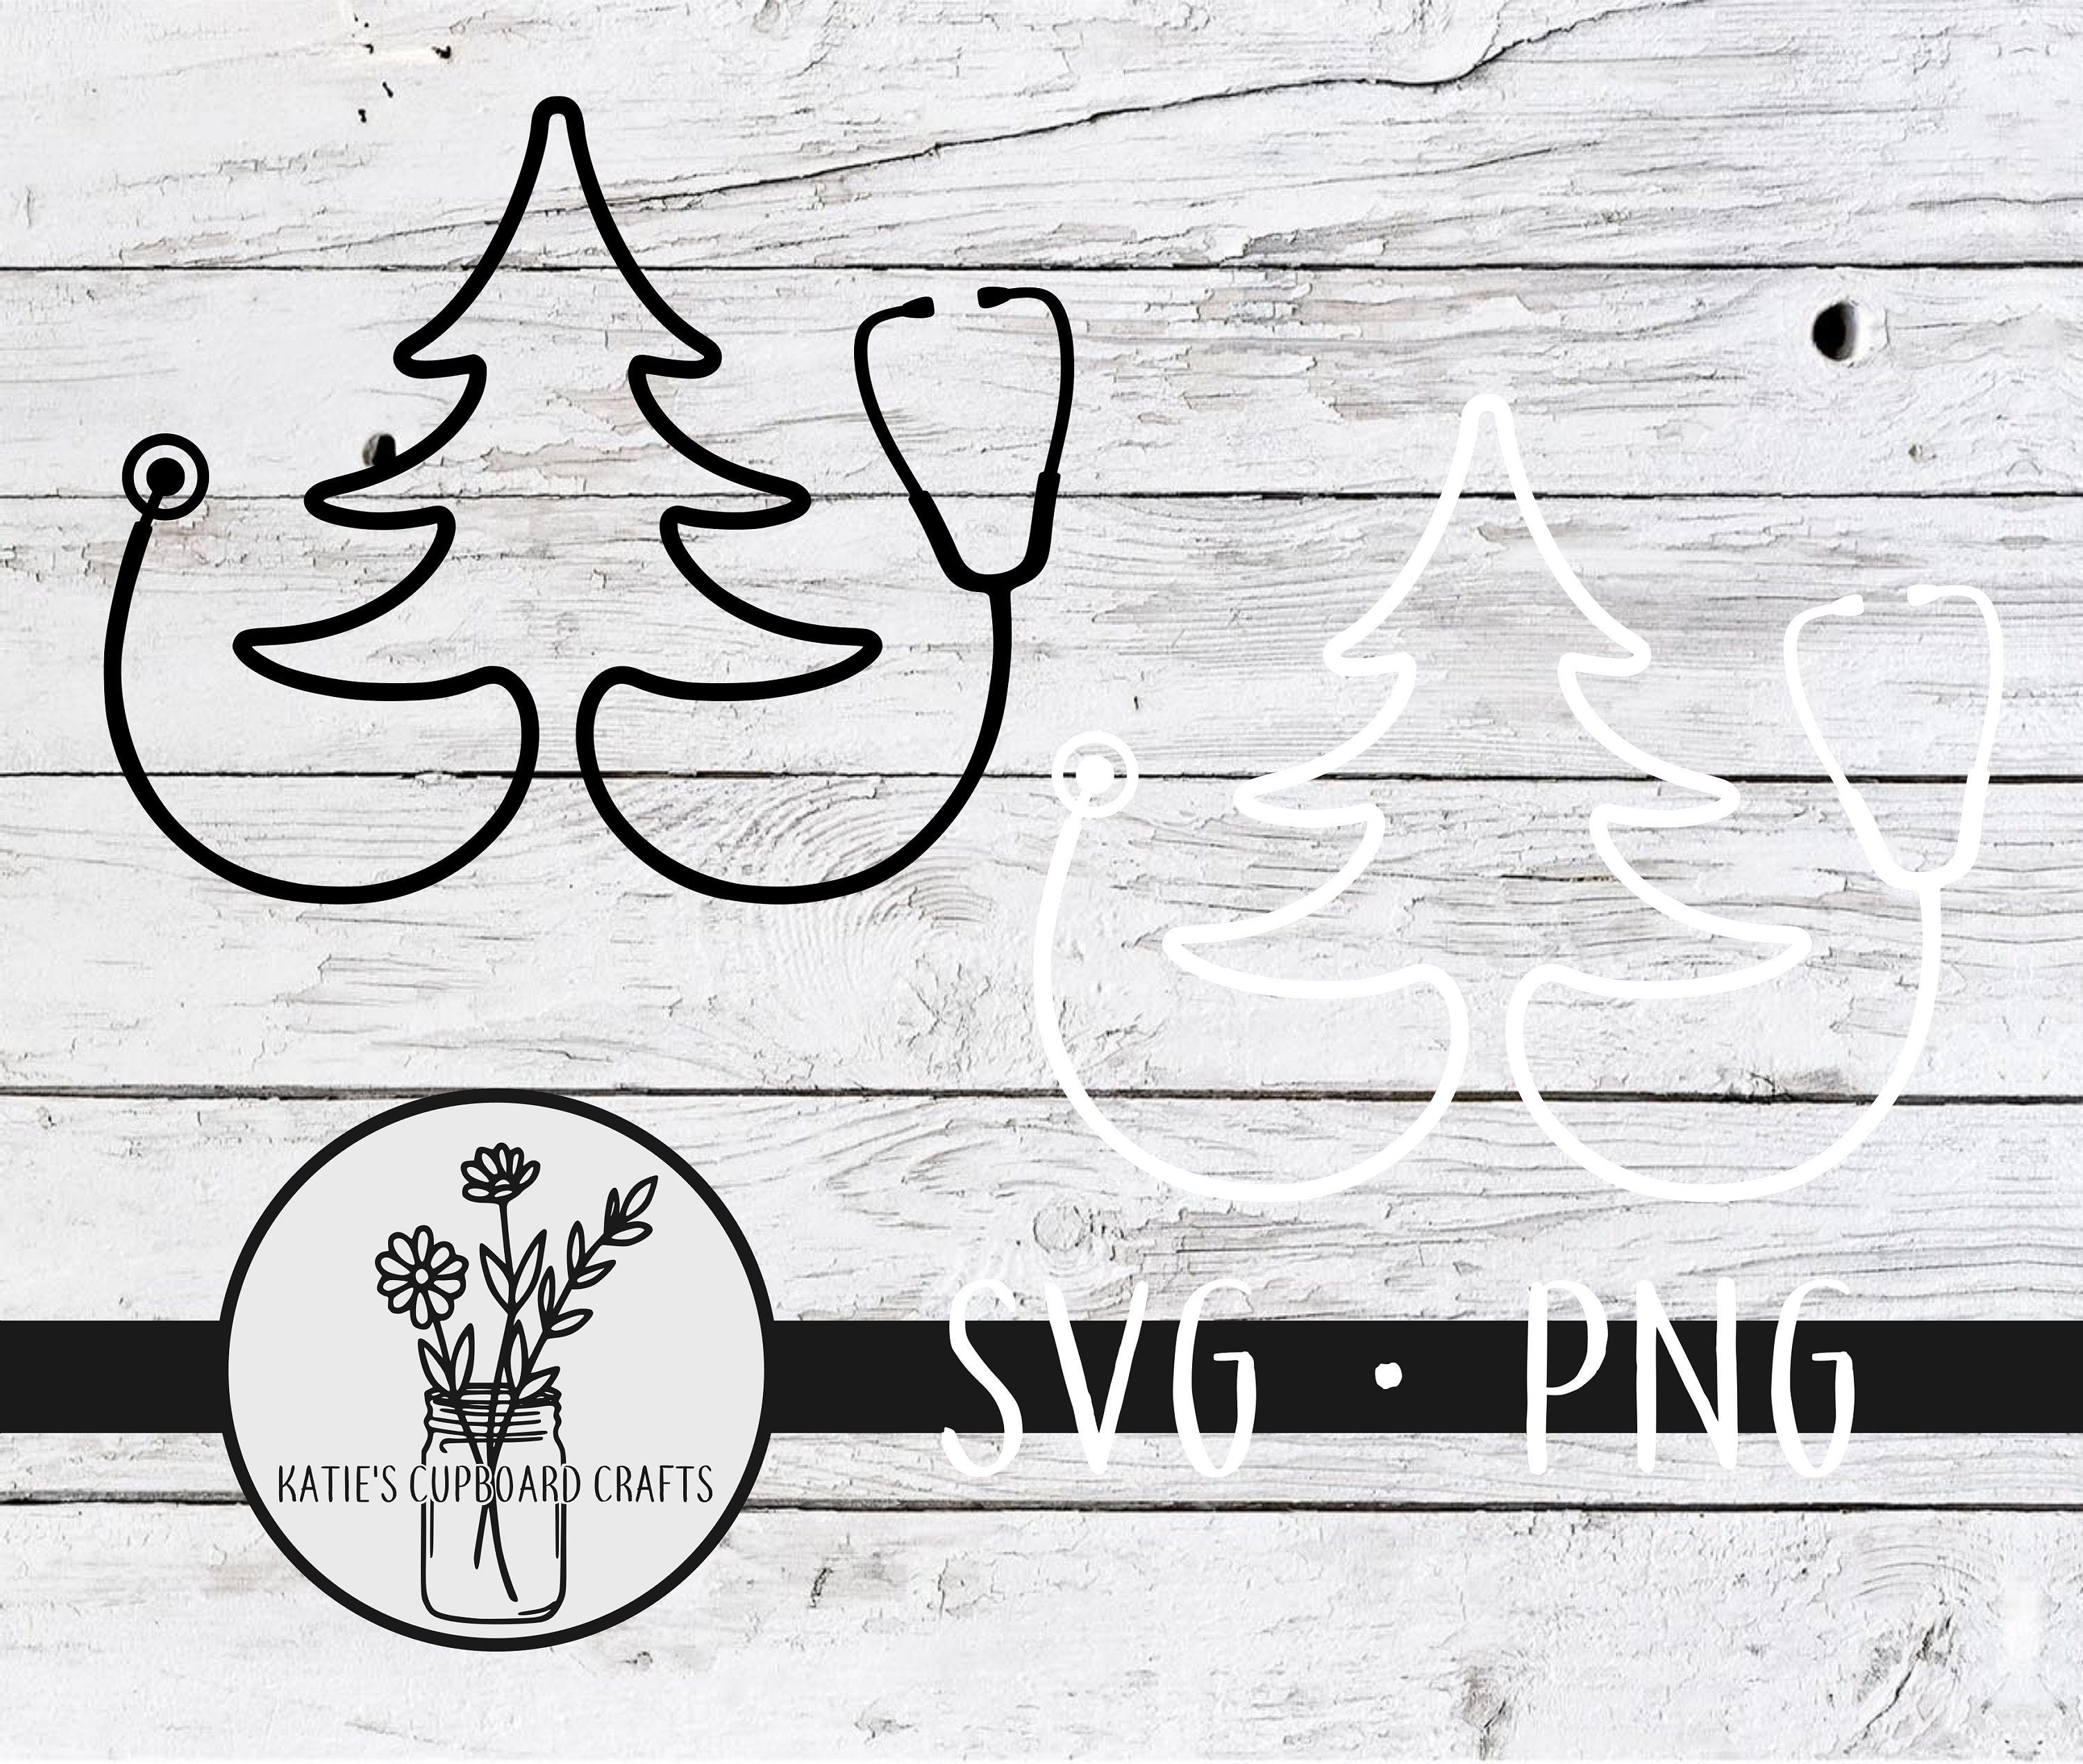 Stethoscope Christmas Tree - SVG Cut File